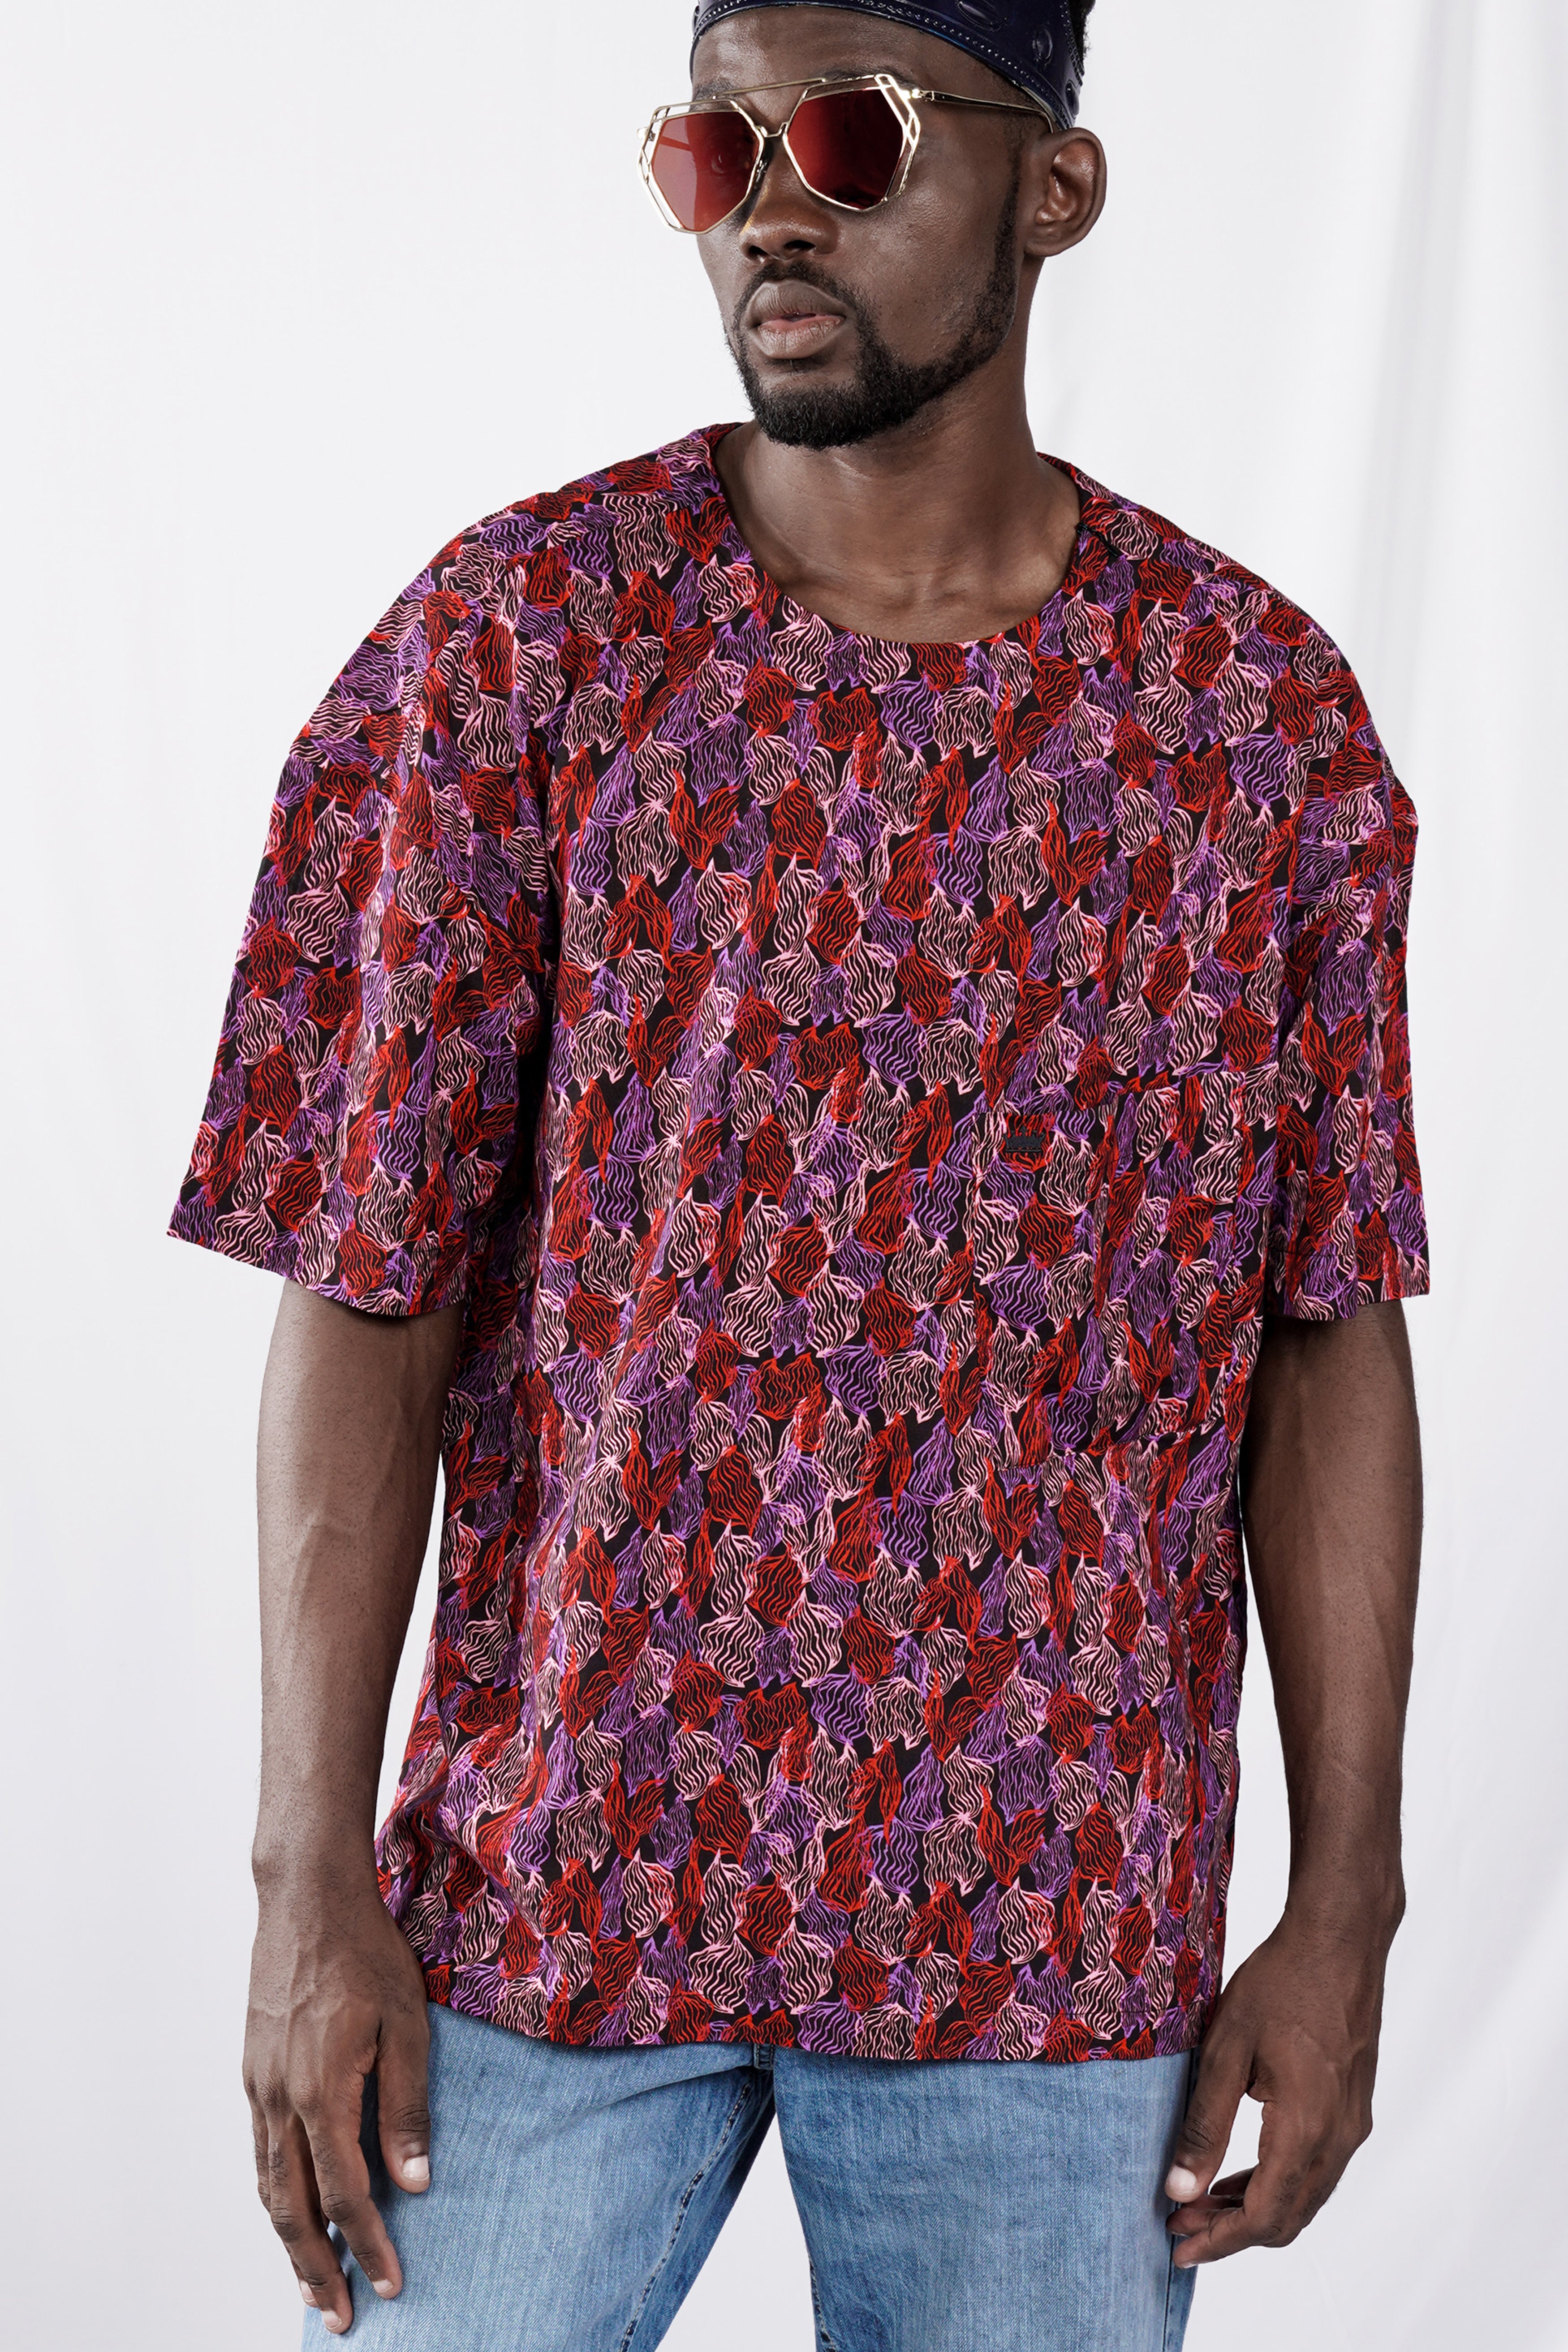 Sinopia Red and Black Printed Lightweight Premium Cotton Oversized Designer Shirt